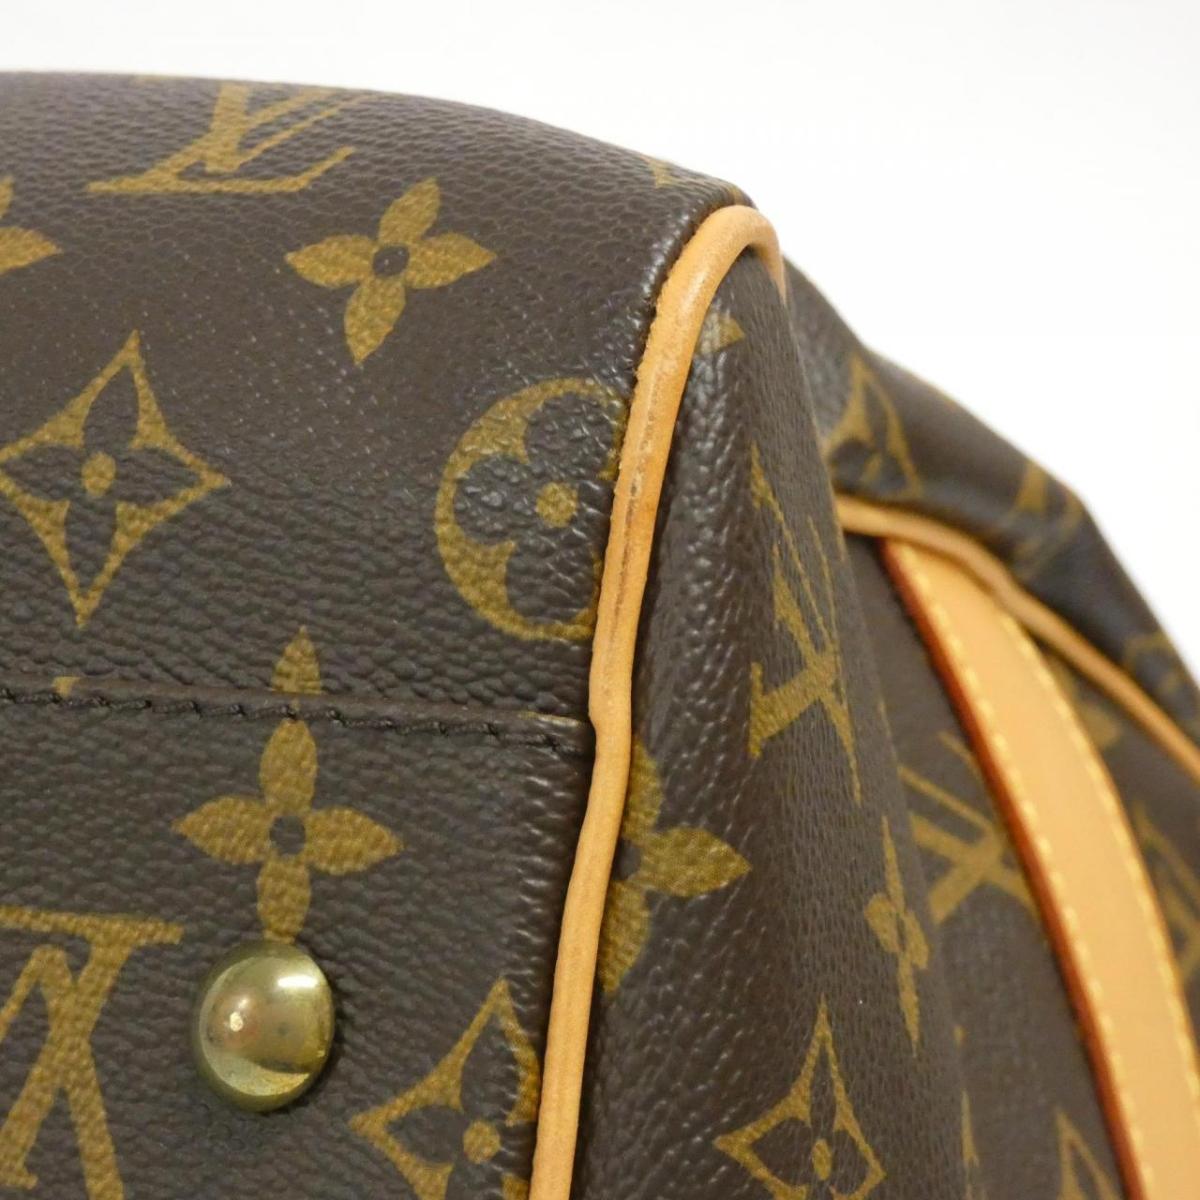 Louis Vuitton M40074 Monogram Carry-Our Boston Bag